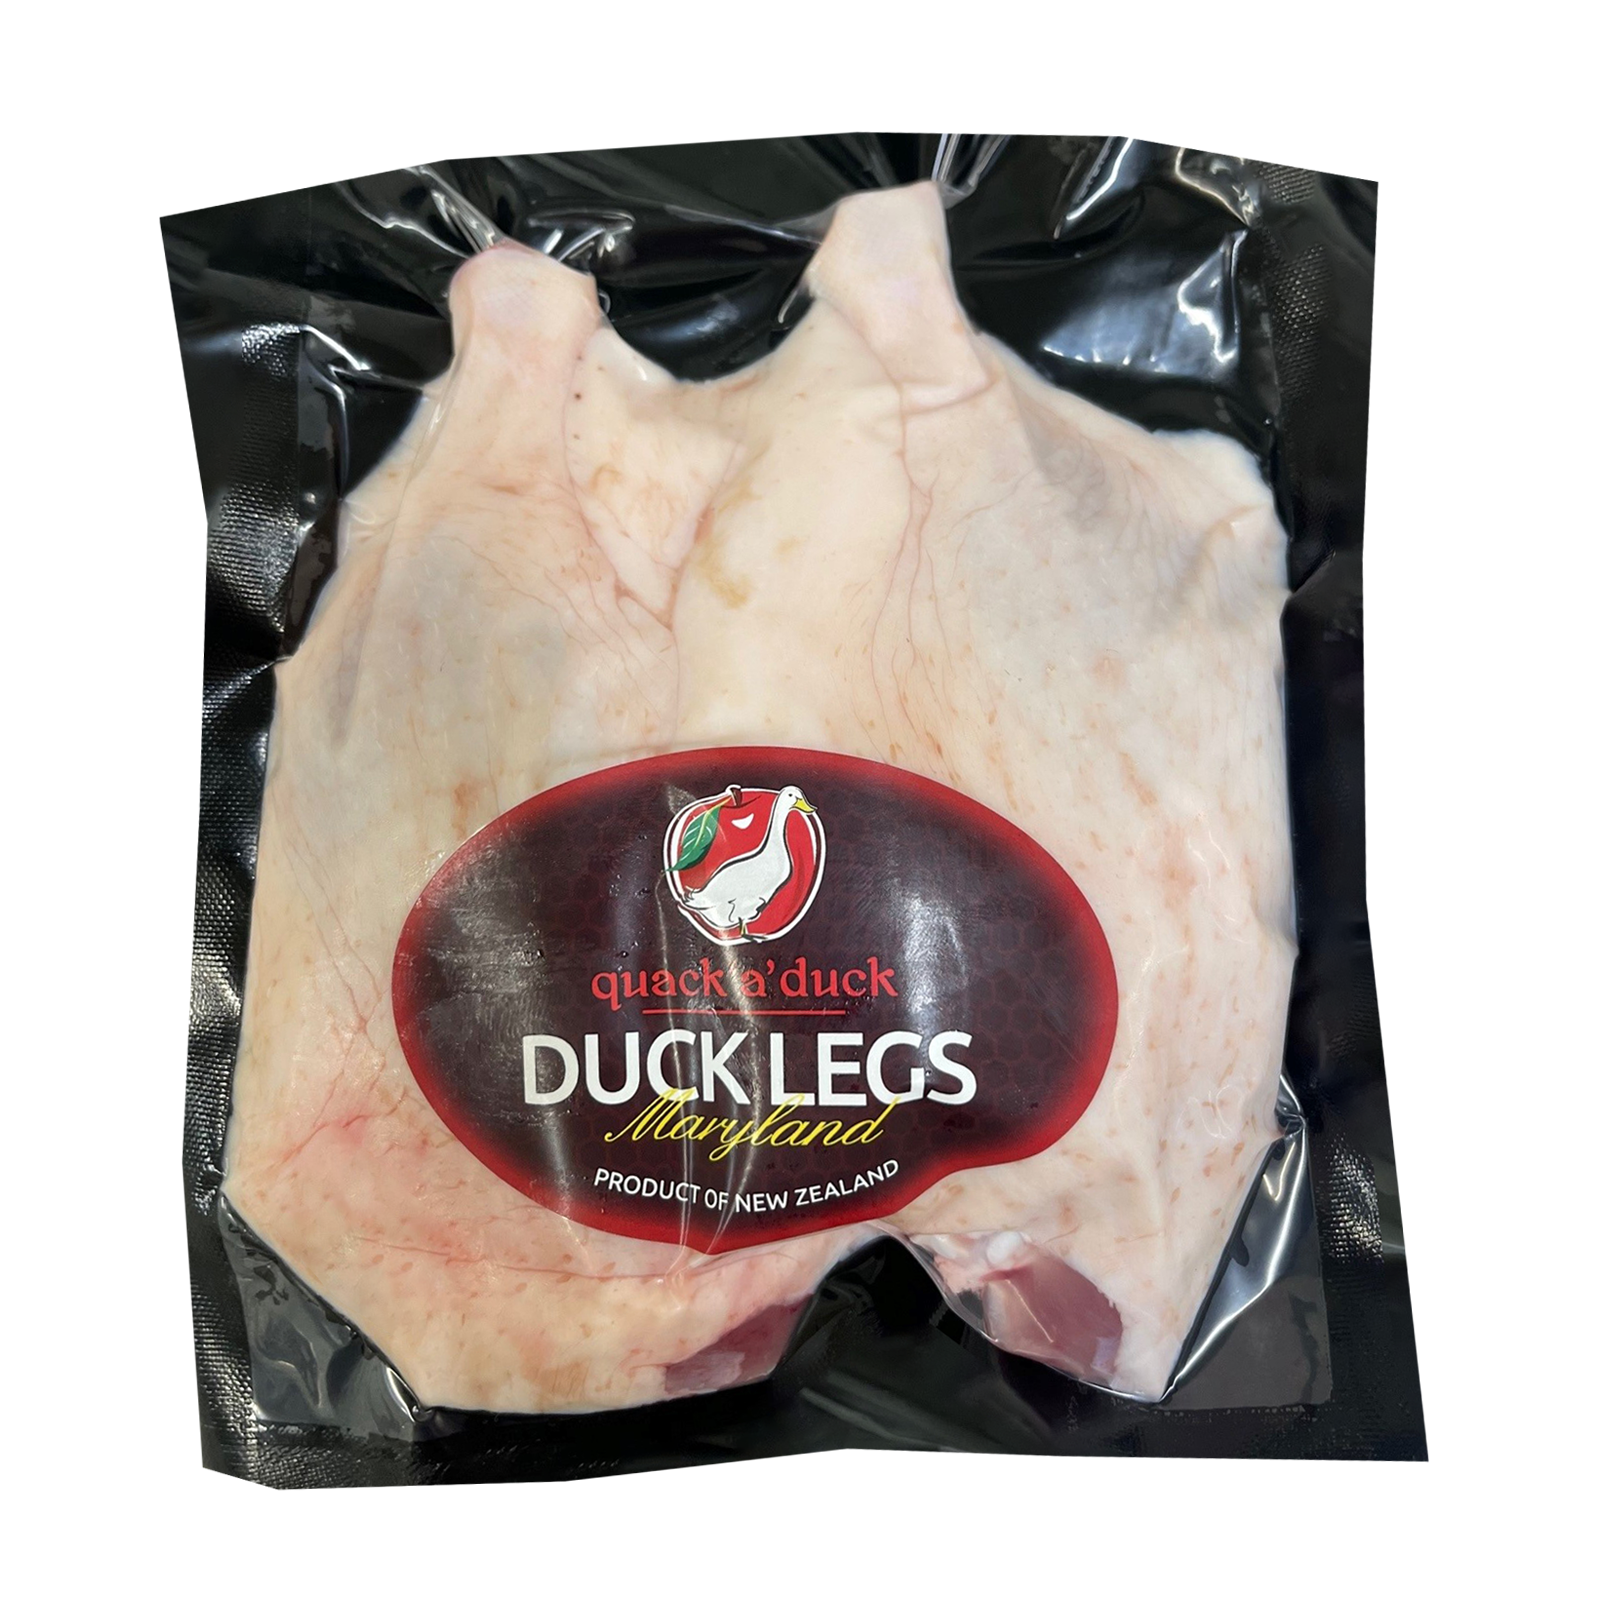 Range-Free Bone-In Duck Legs from New Zealand (450g) - Horizon Farms